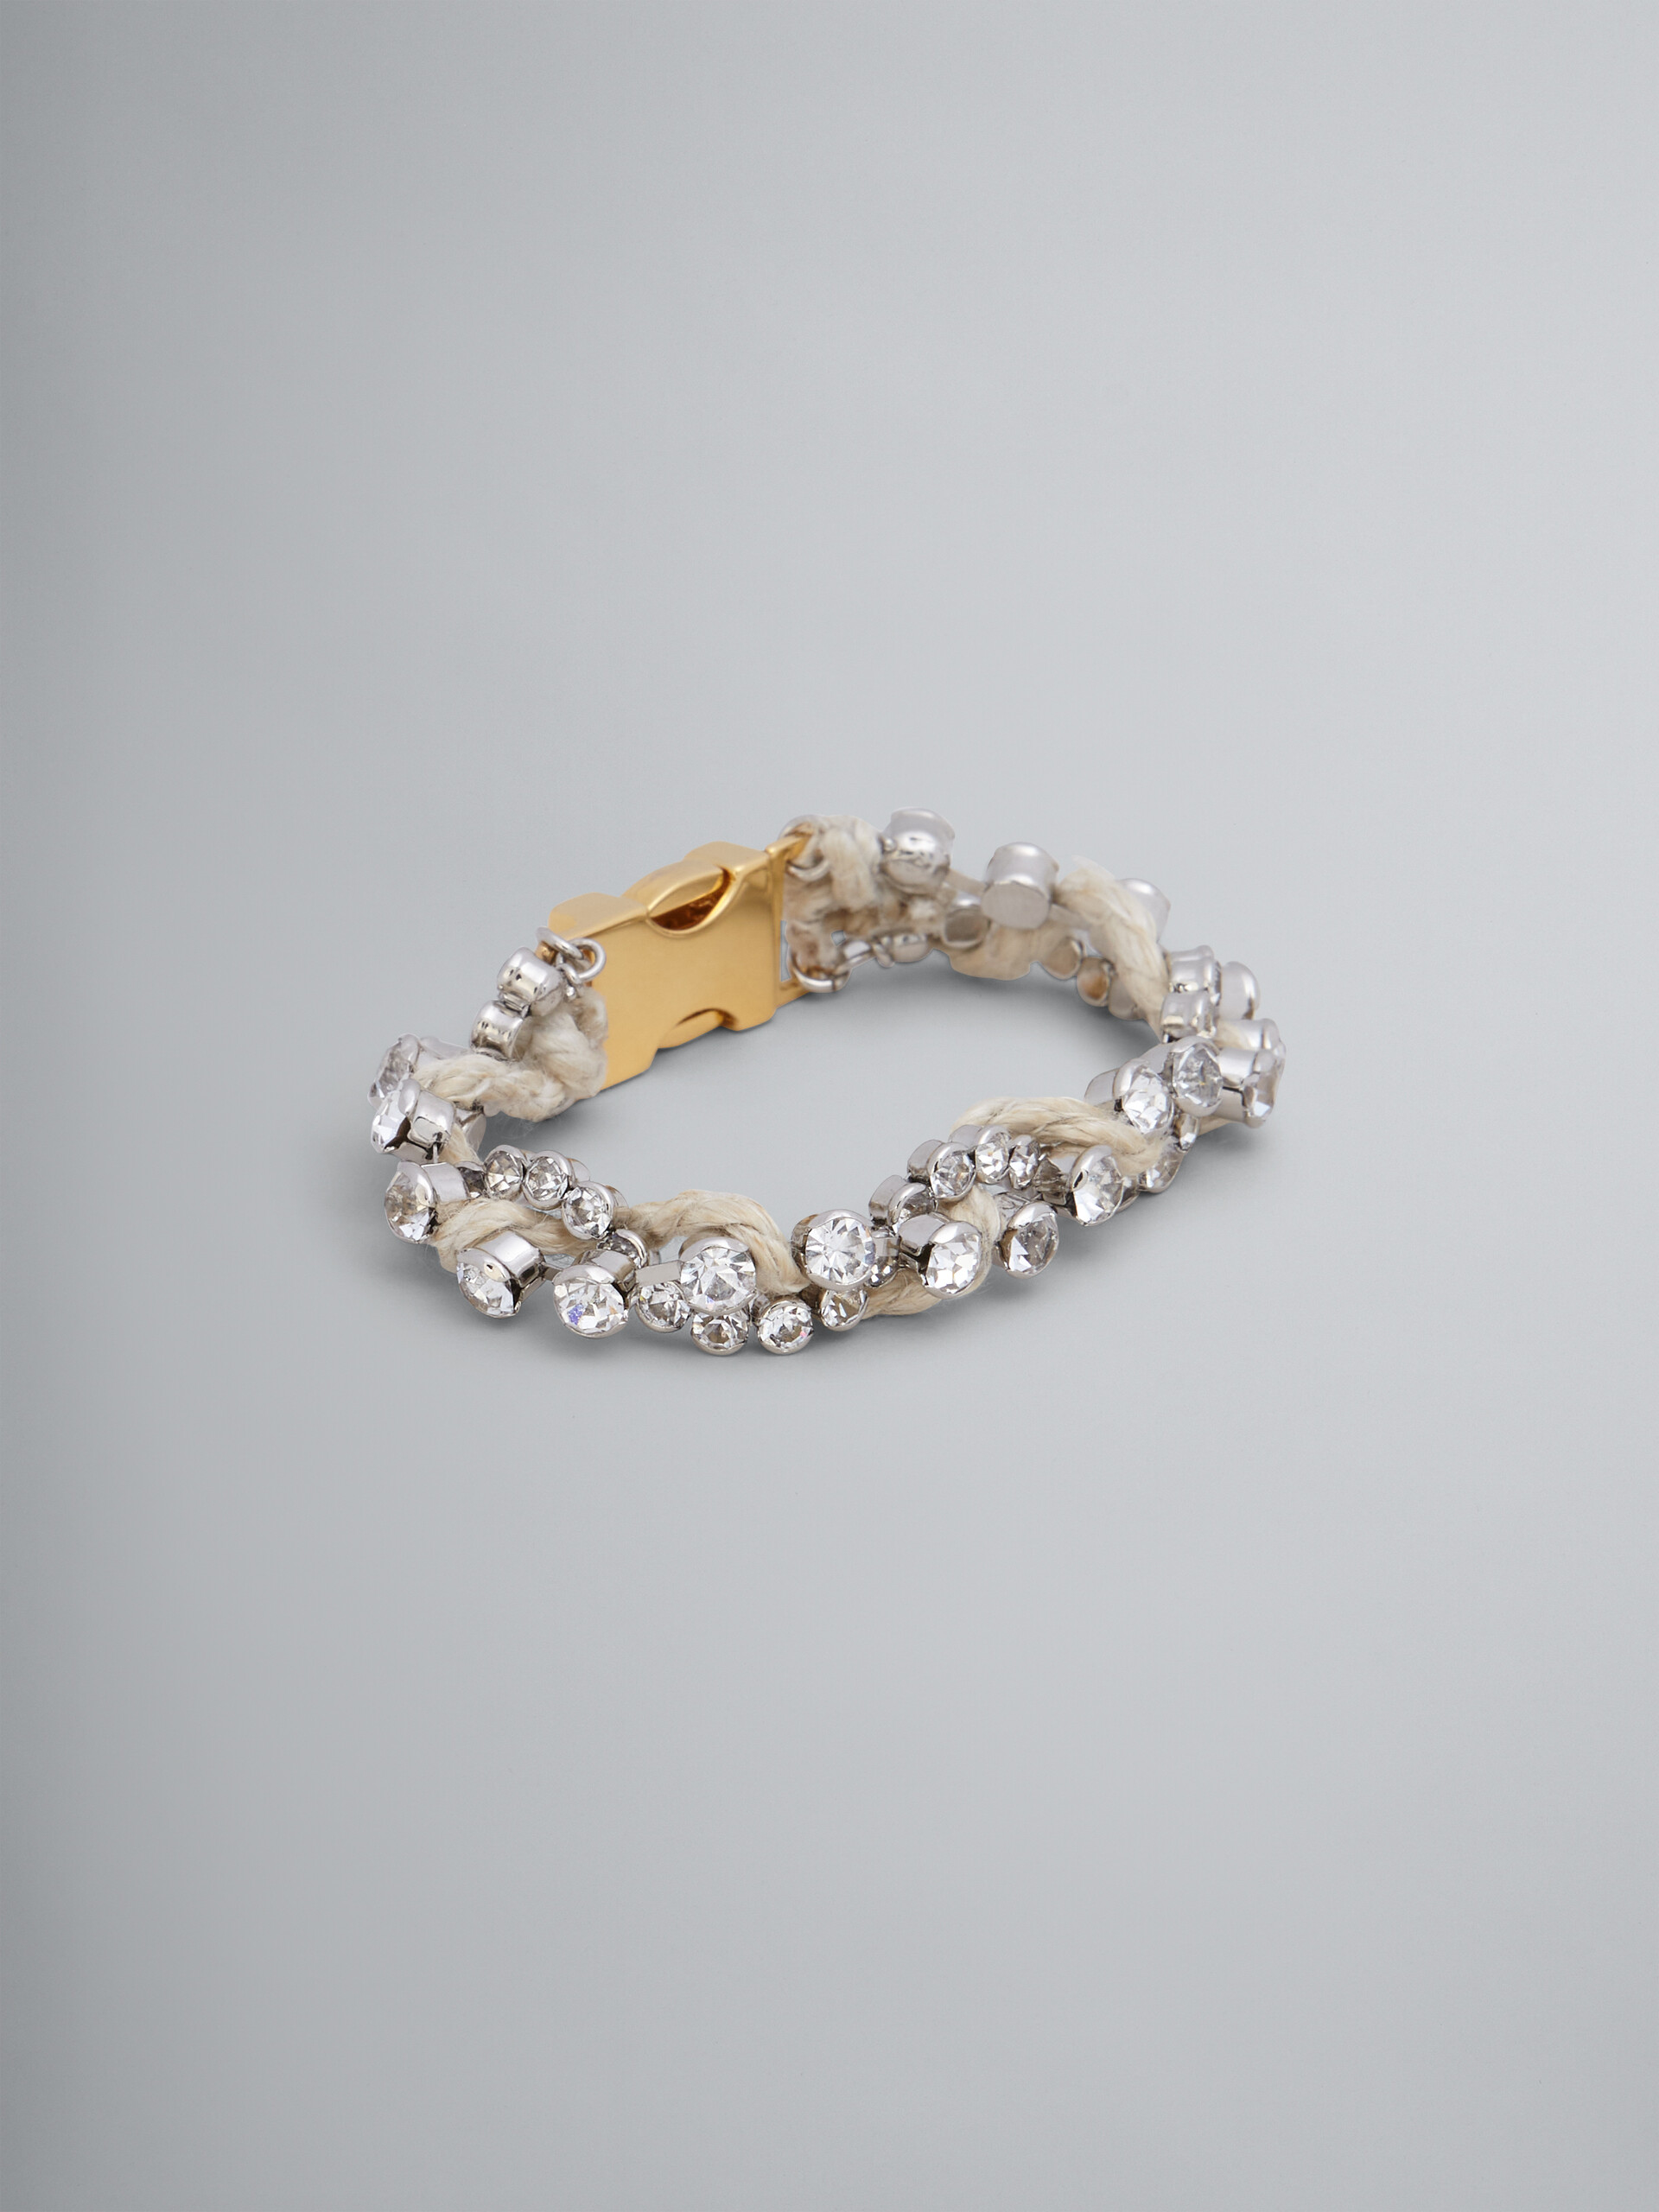 Brass and strass FOUND TREASURES bracelet - Bracelets - Image 1